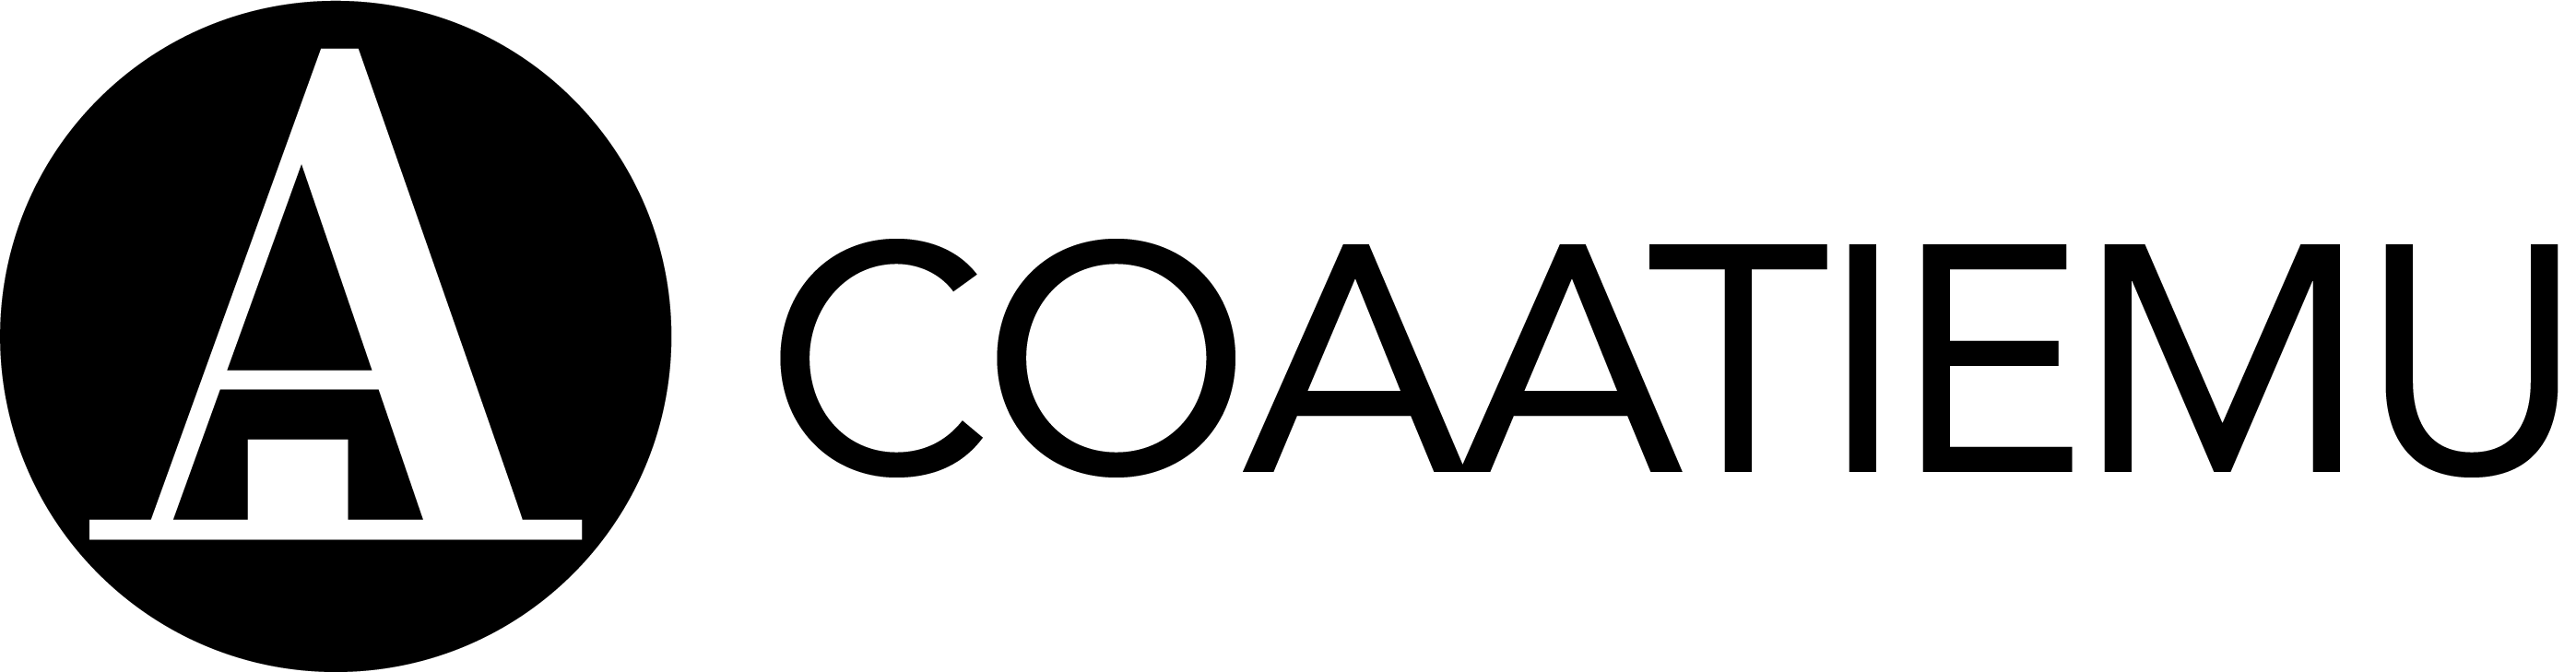 COAATIEMU logo